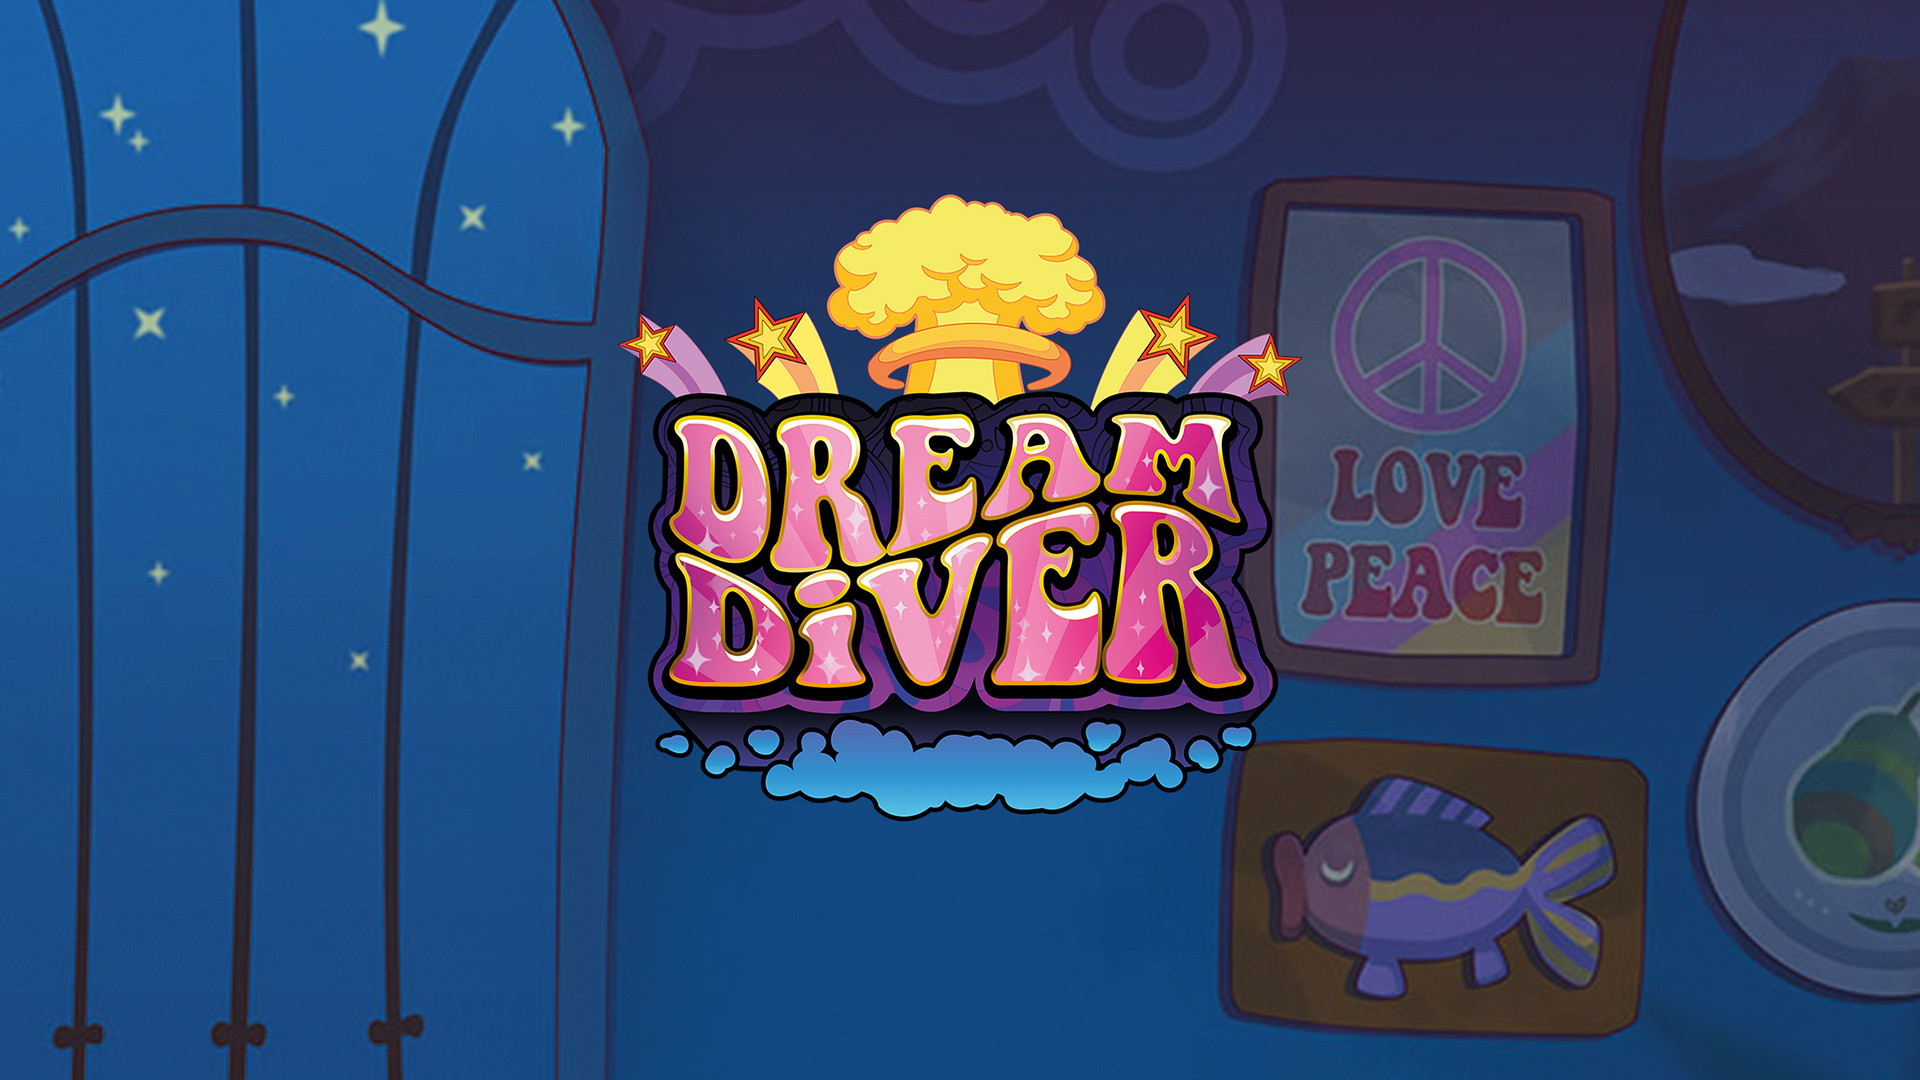 Dream Diver